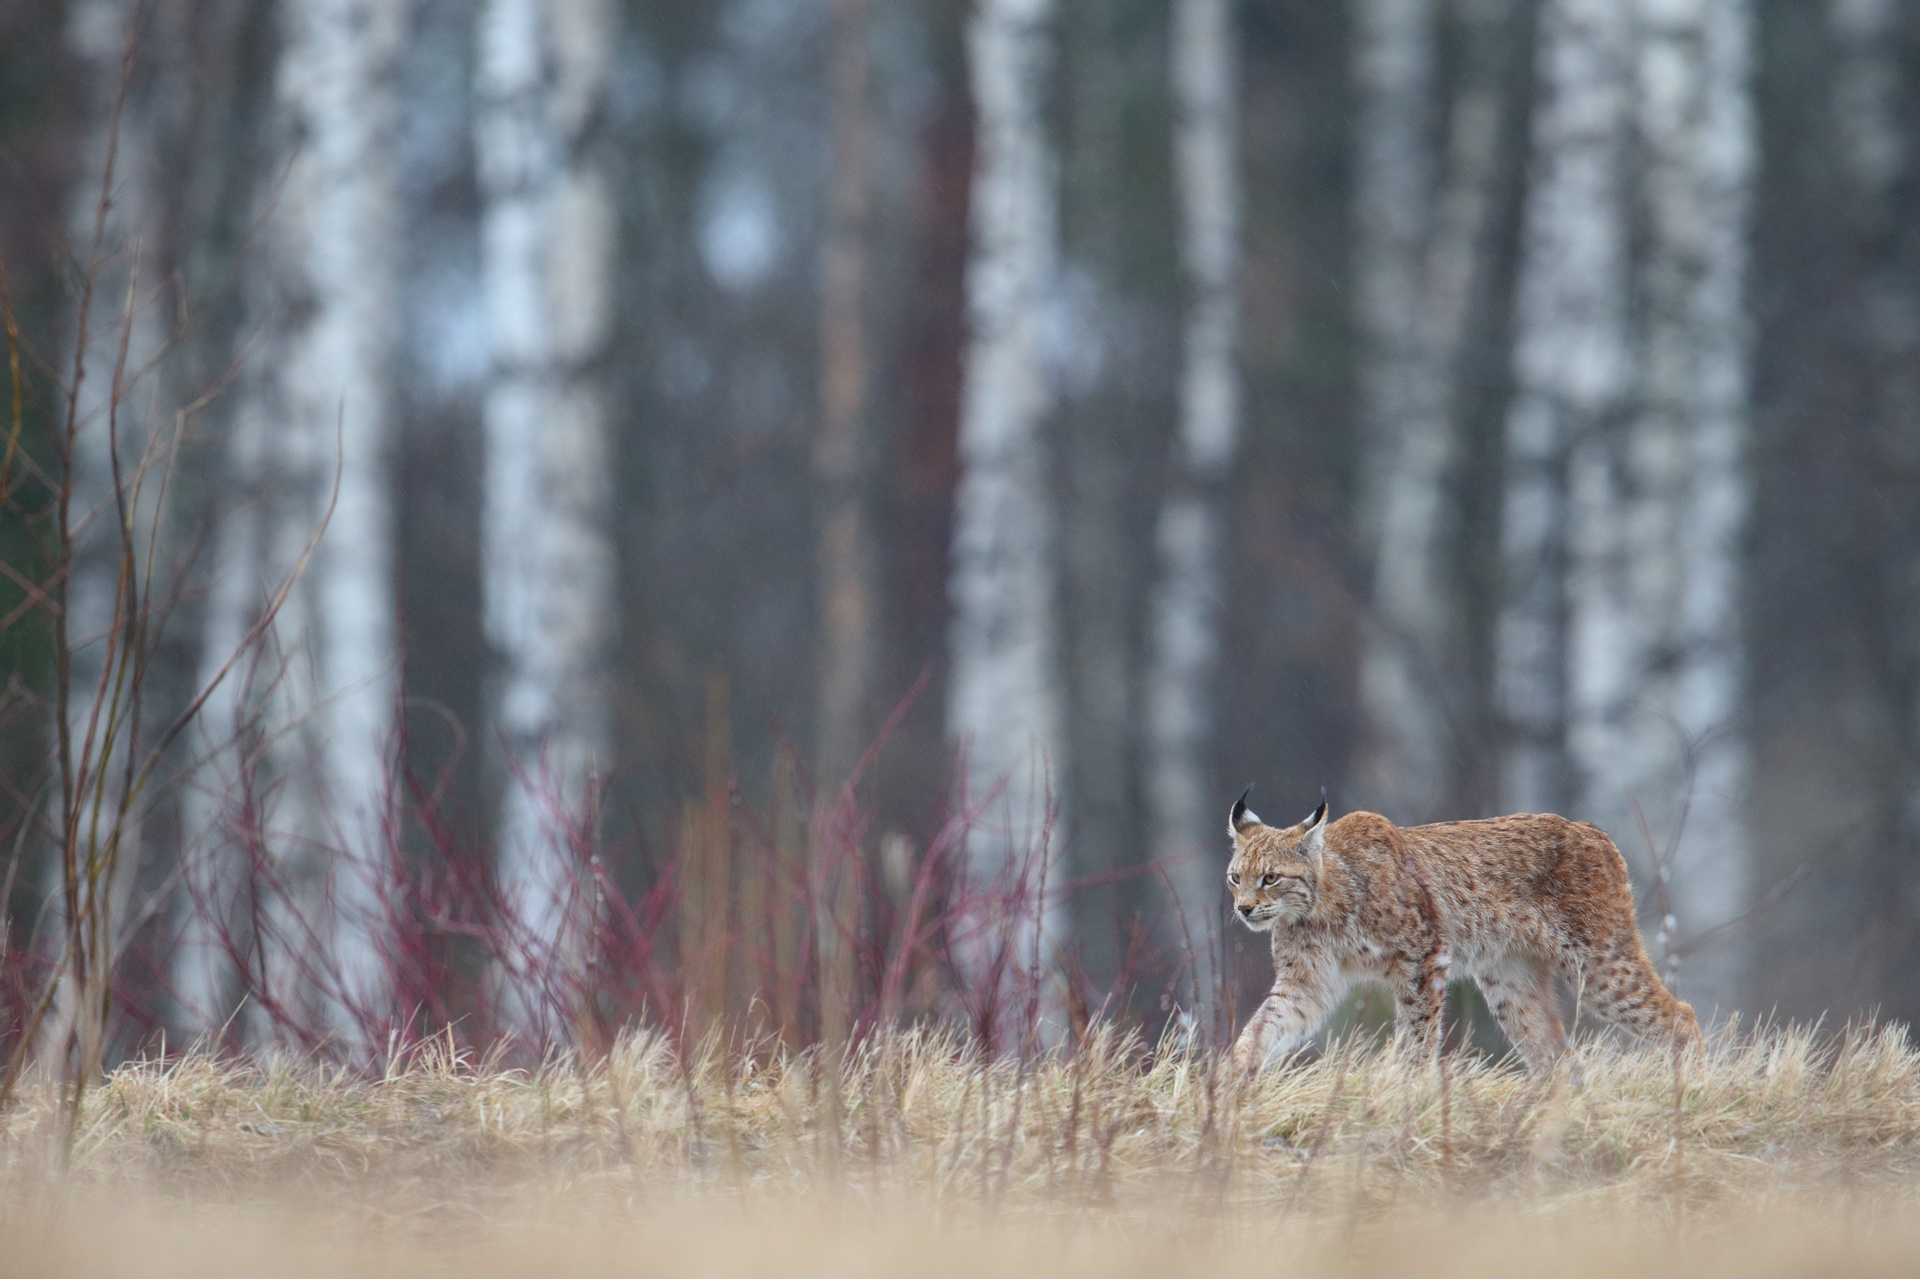 Lynx stalks through the forest in Estonia.